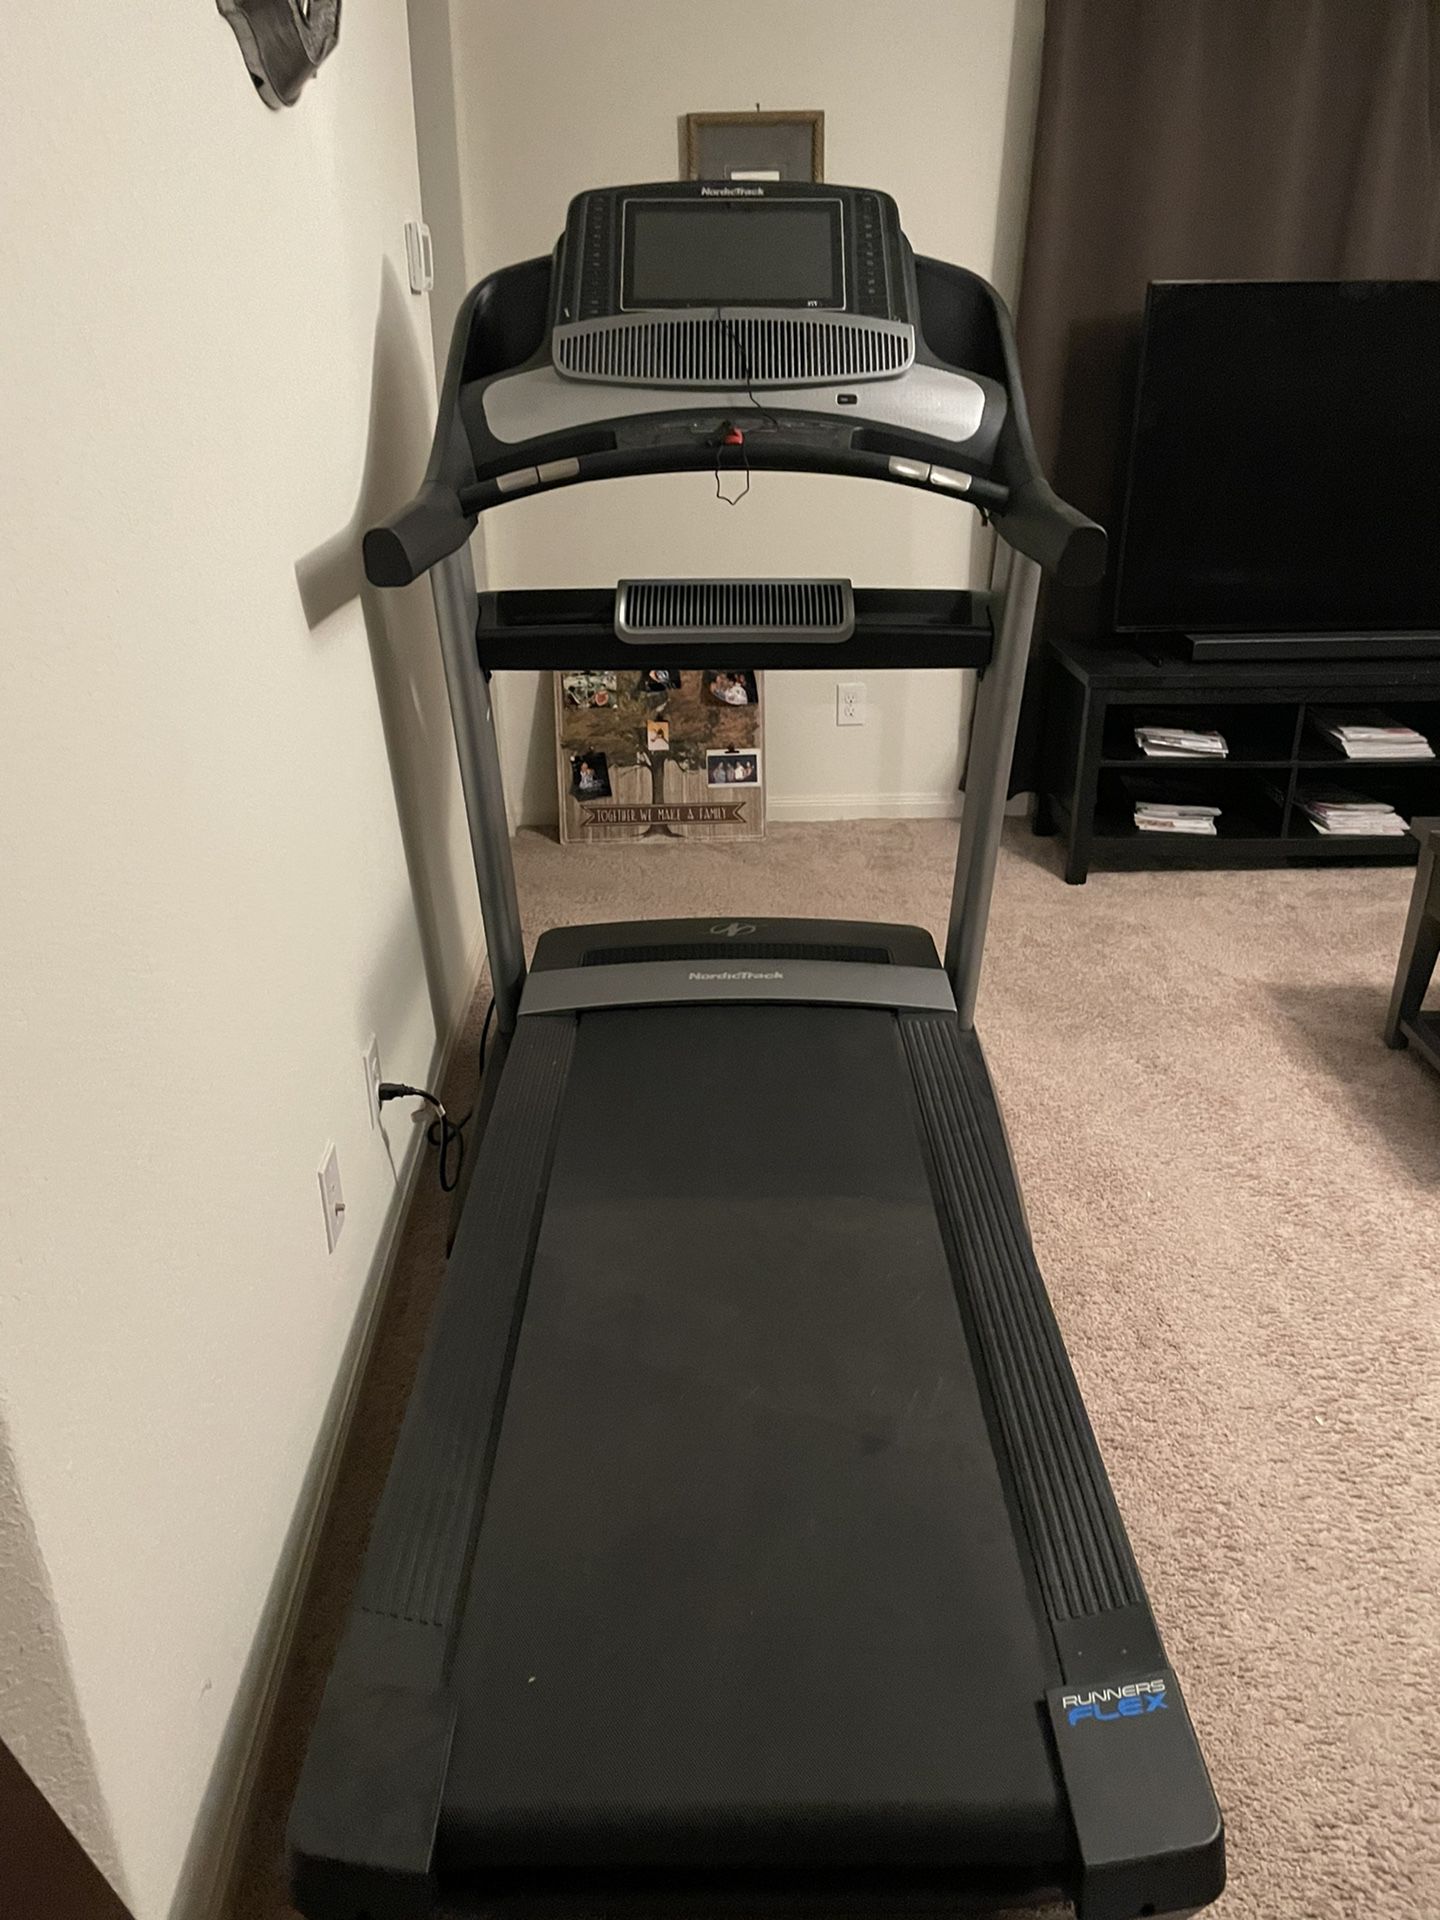  Nordictrack Treadmill  Black And Grey 